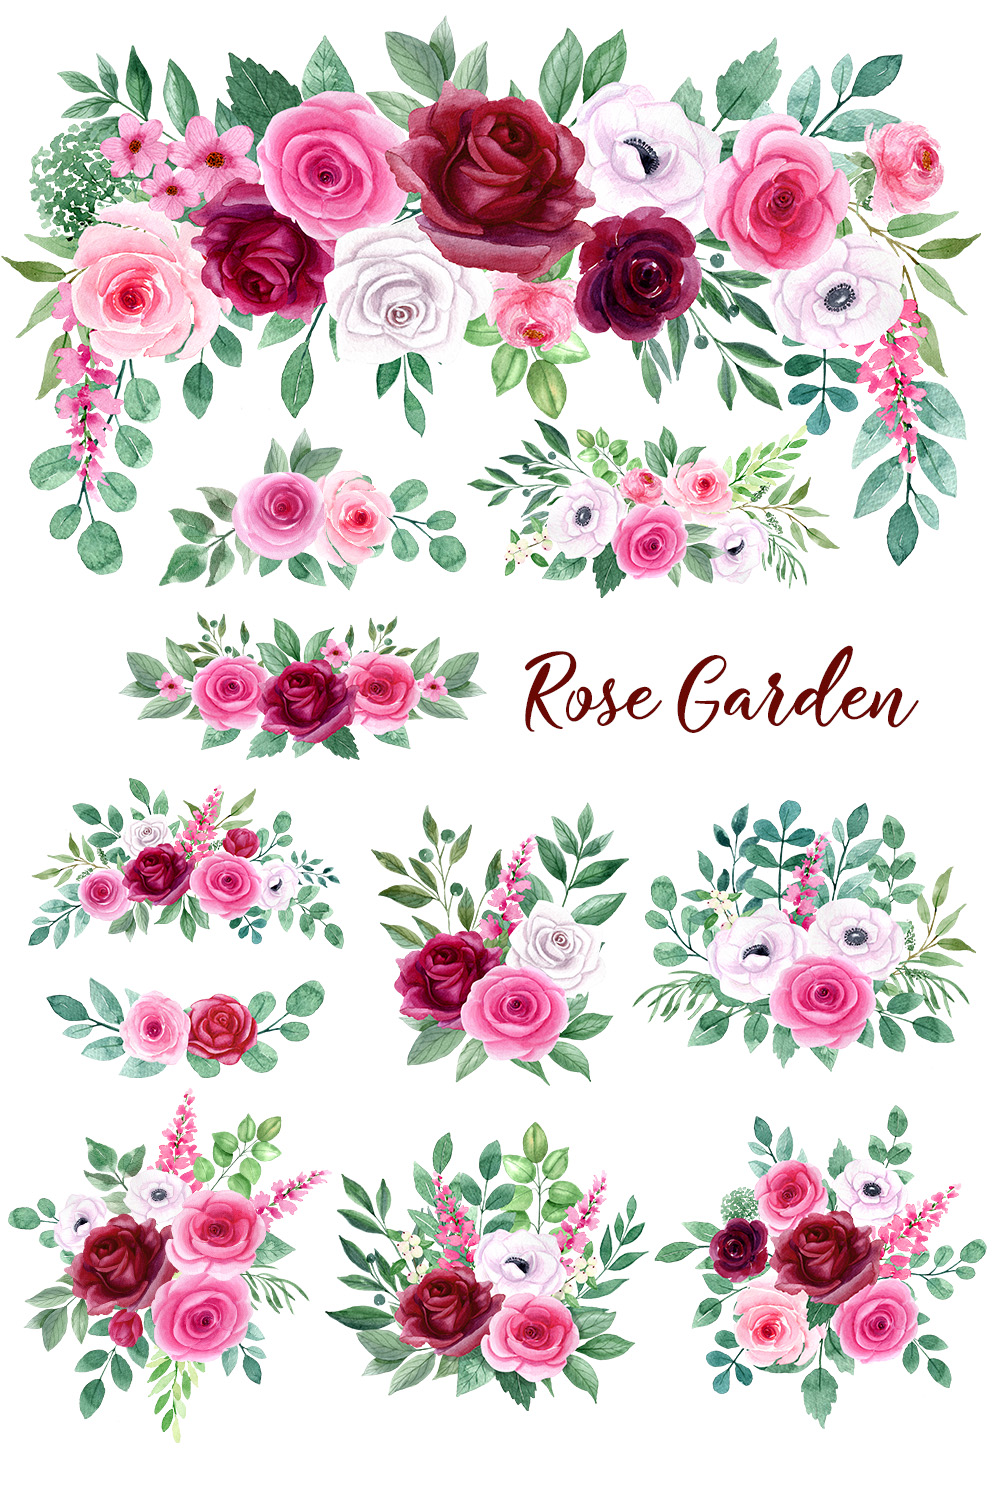 Rose Garden - Set of Watercolor Flowers pinterest image.